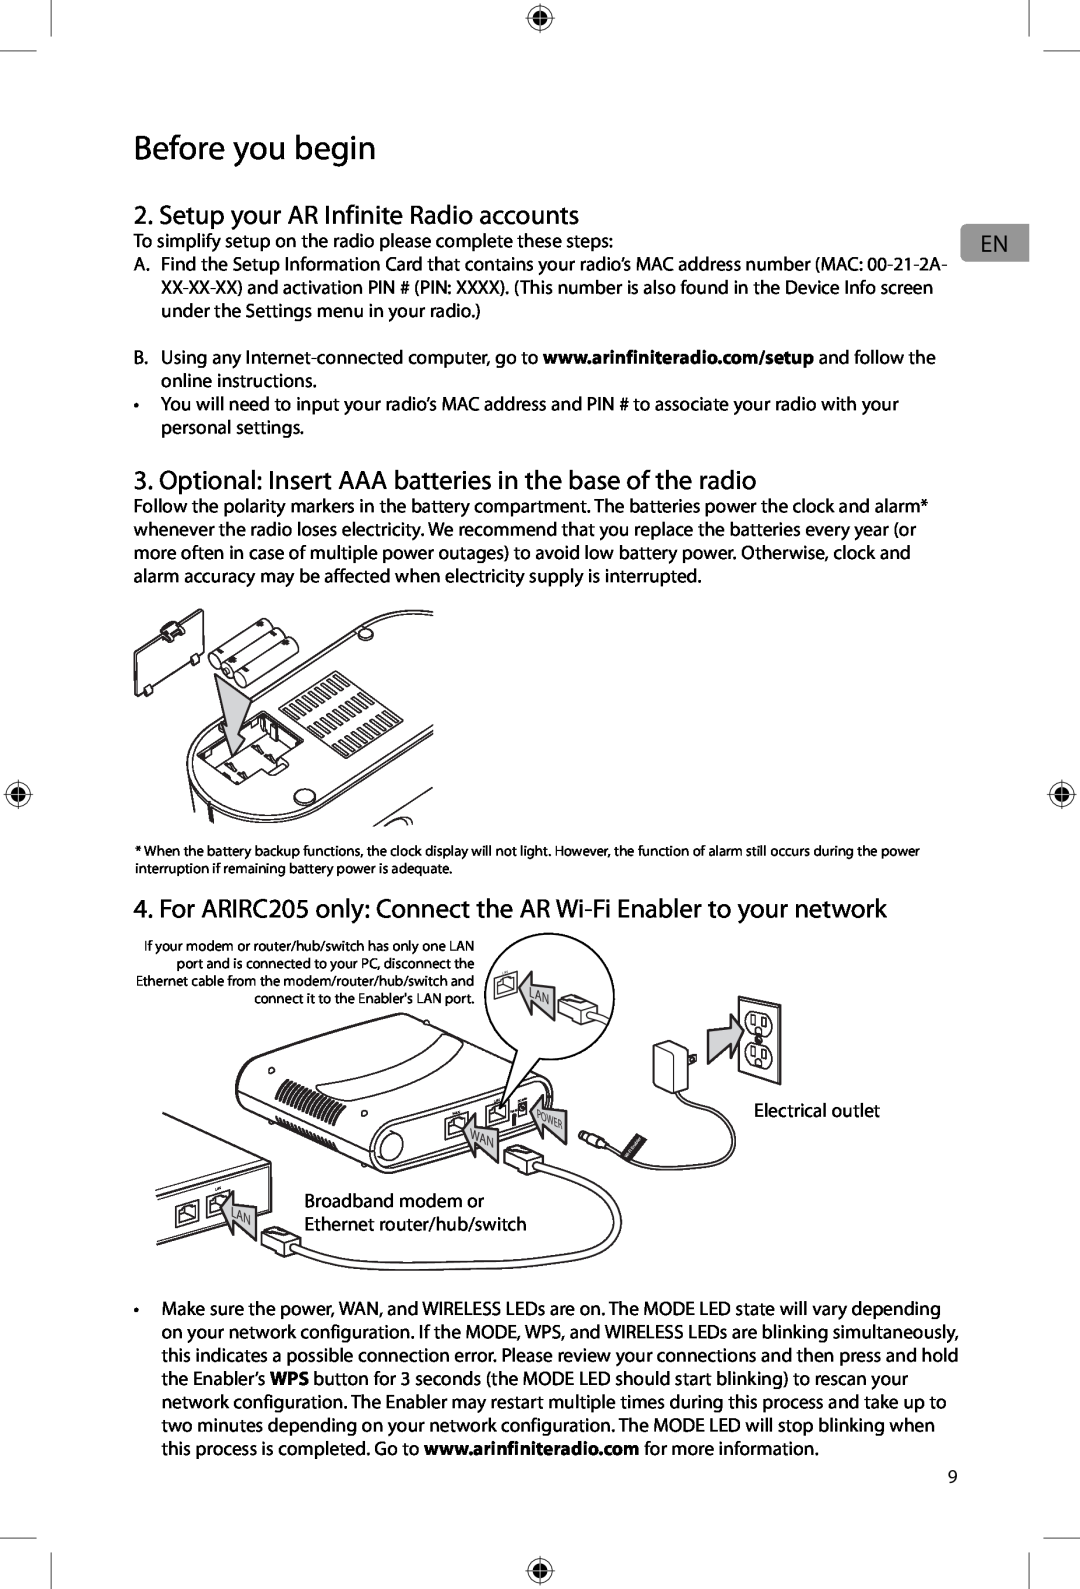 Acoustic Research ARIRC200, ARIRC205 user manual Setup your AR Infinite Radio accounts, Before you begin 